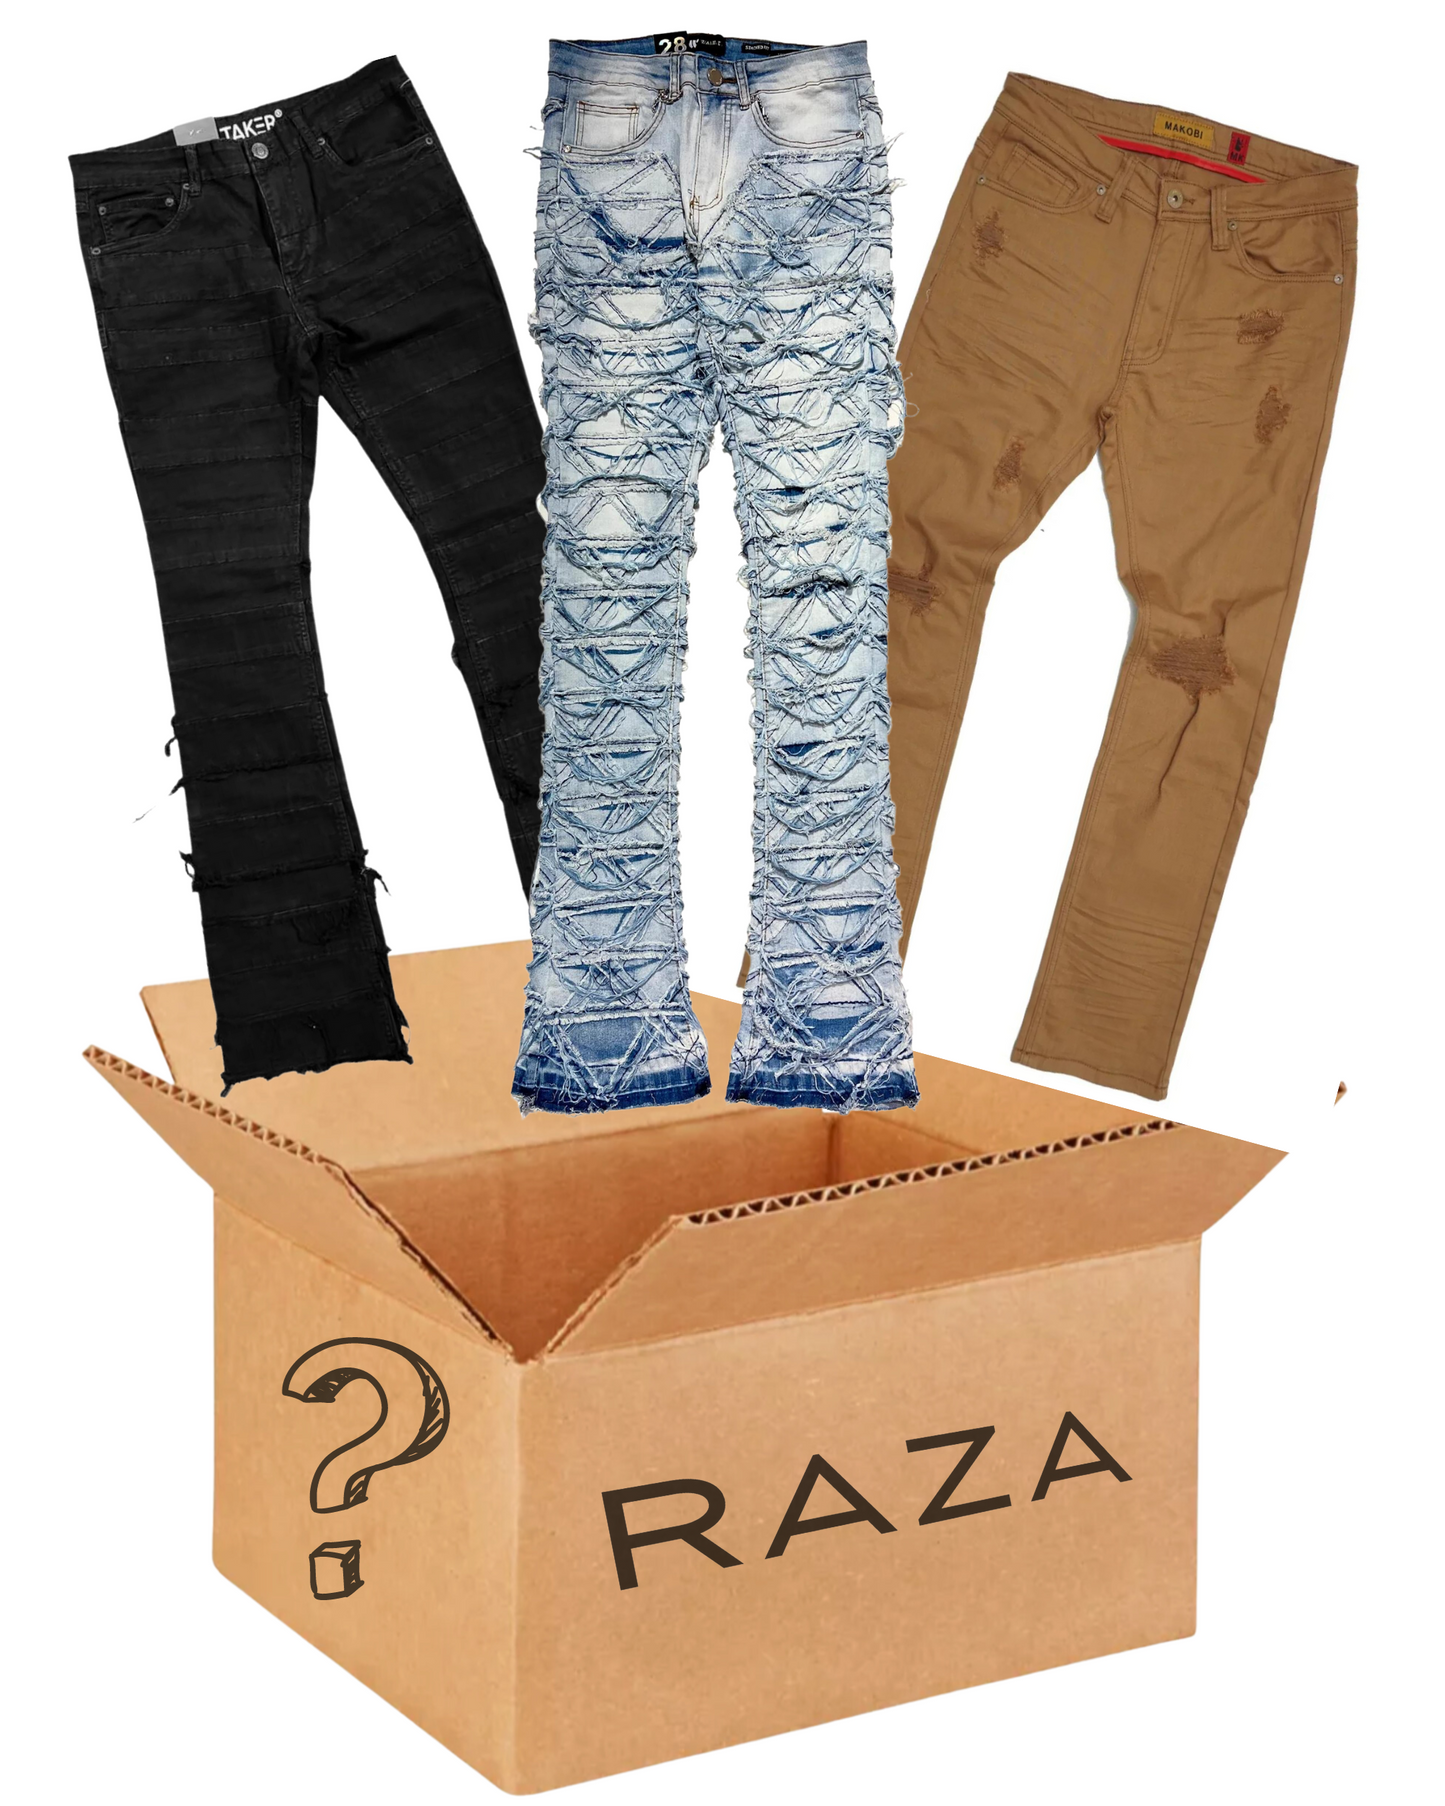 Mystery Box - 3 Random Men's Jeans